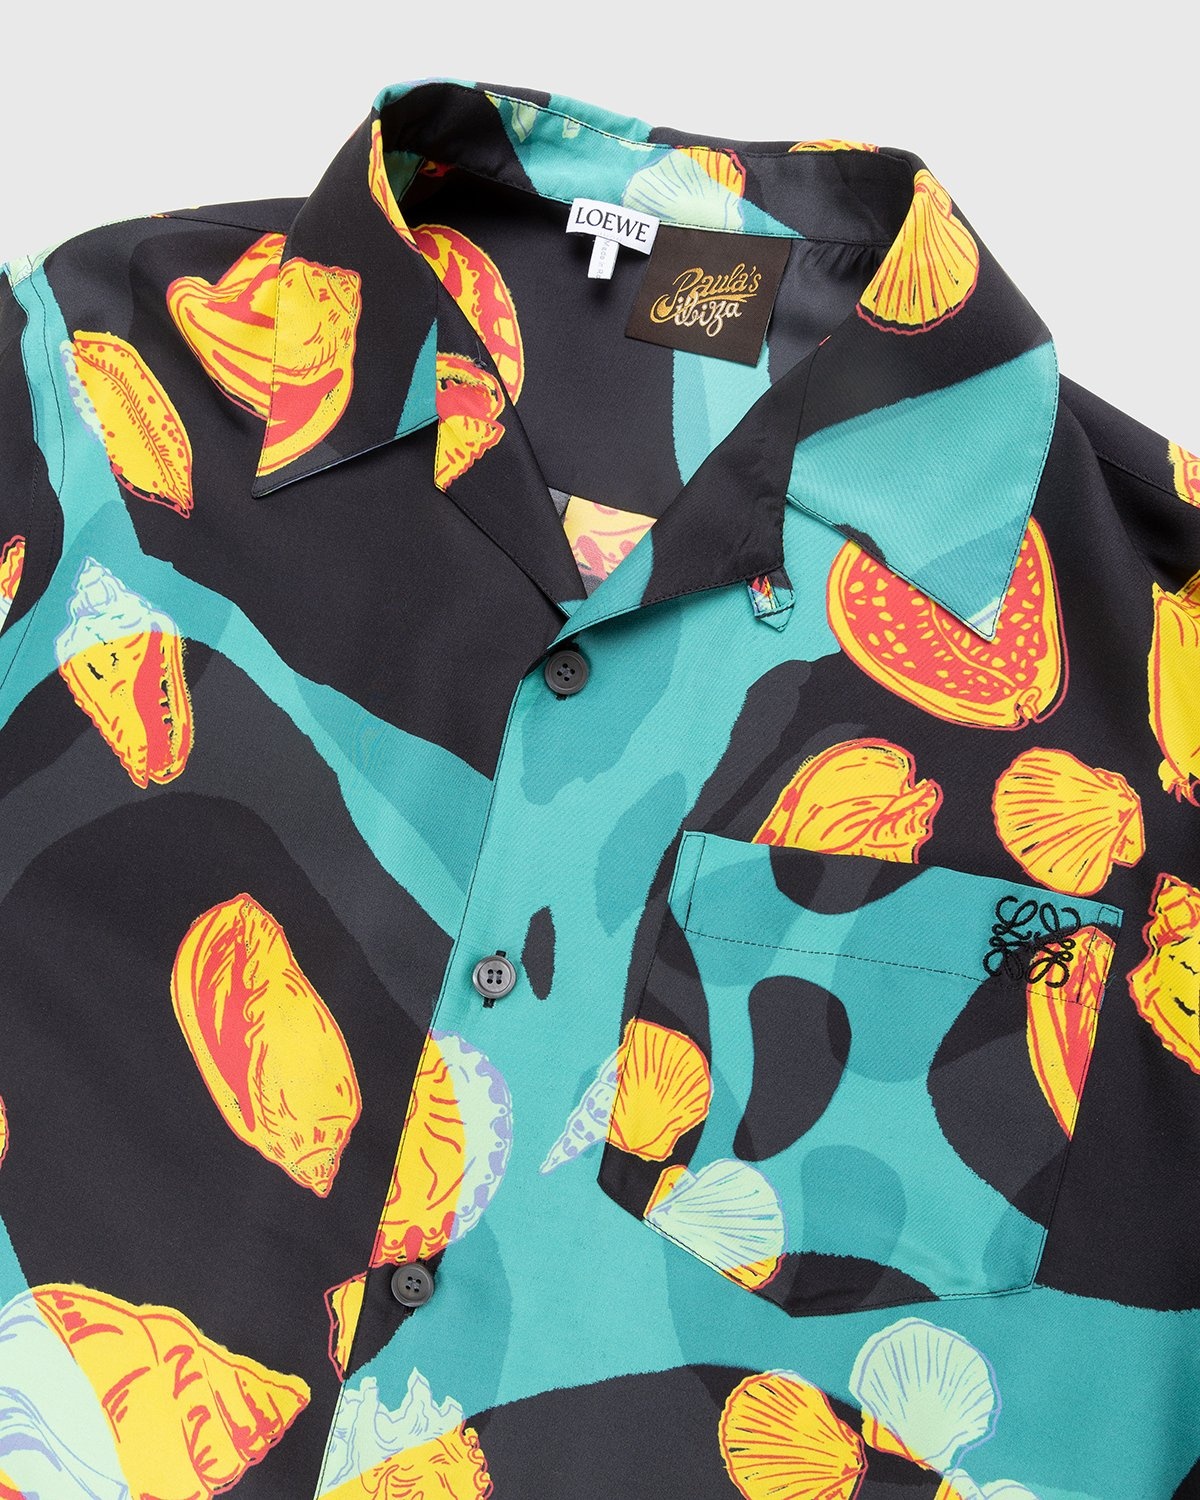 Loewe – Paula's Ibiza Shell Print Bowling Shirt Black - Shortsleeve Shirts - Multi - Image 4